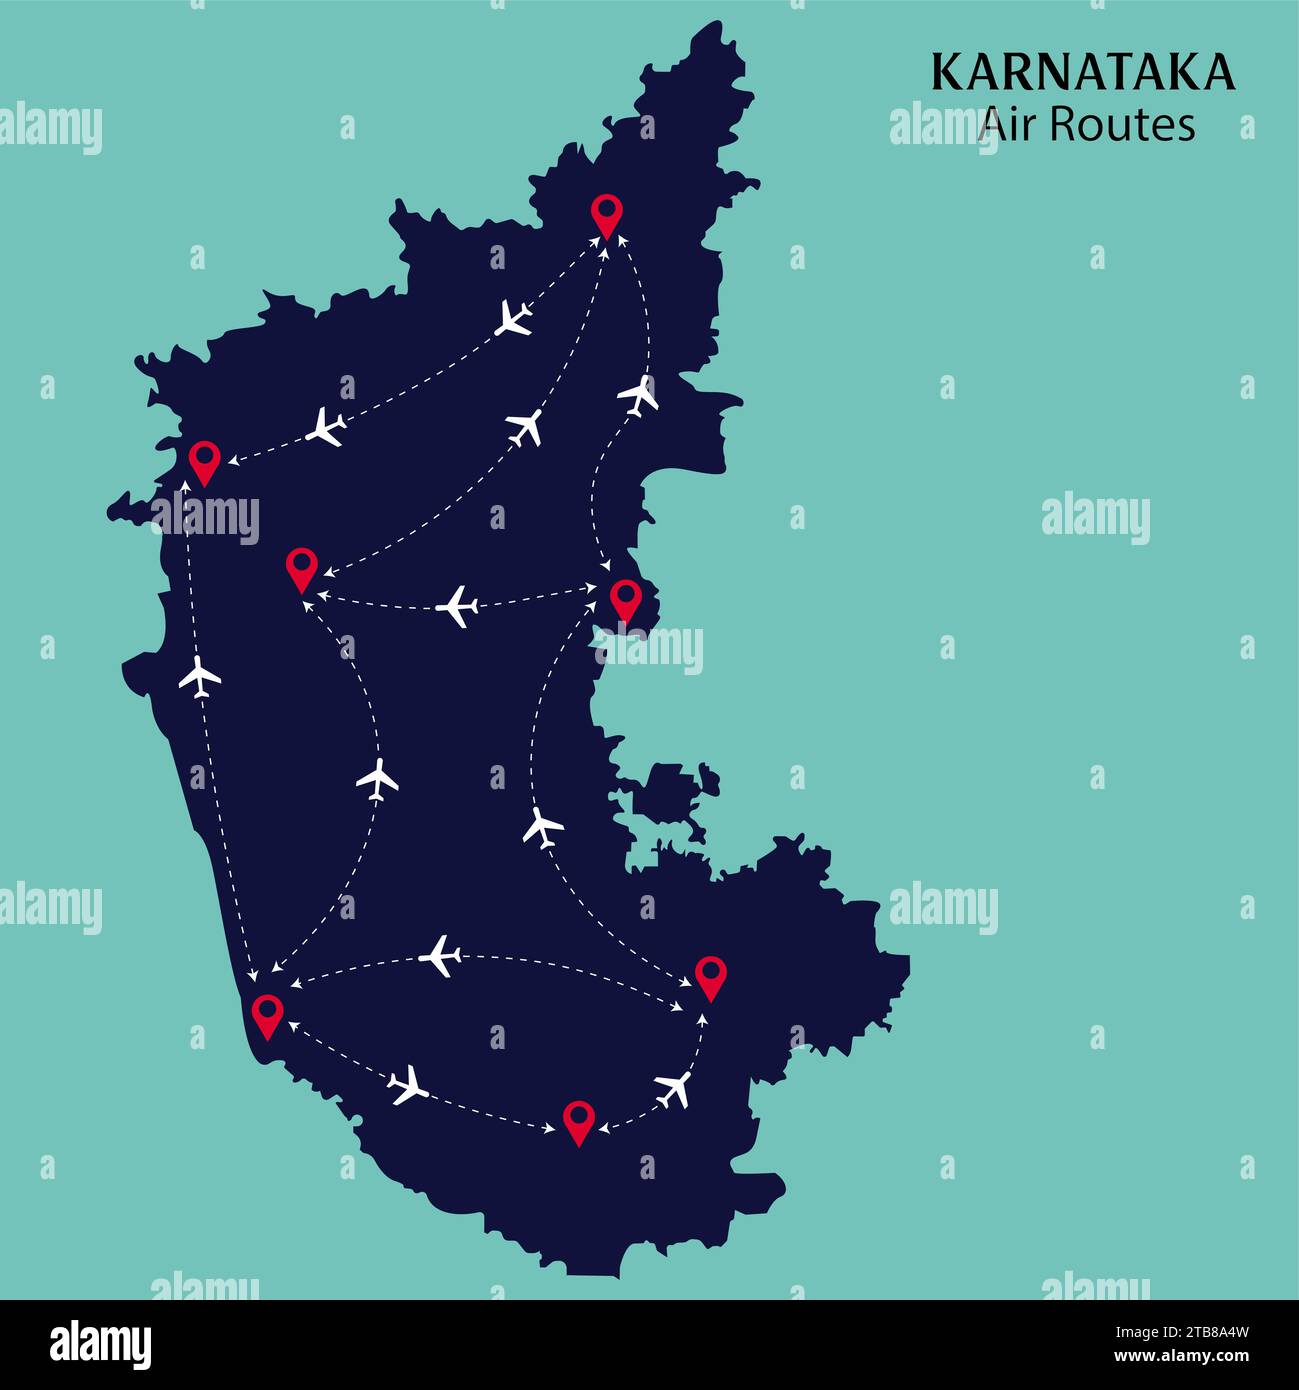 Karnataka Air Route links in the Karnataka Map vector illustration Stock Vector